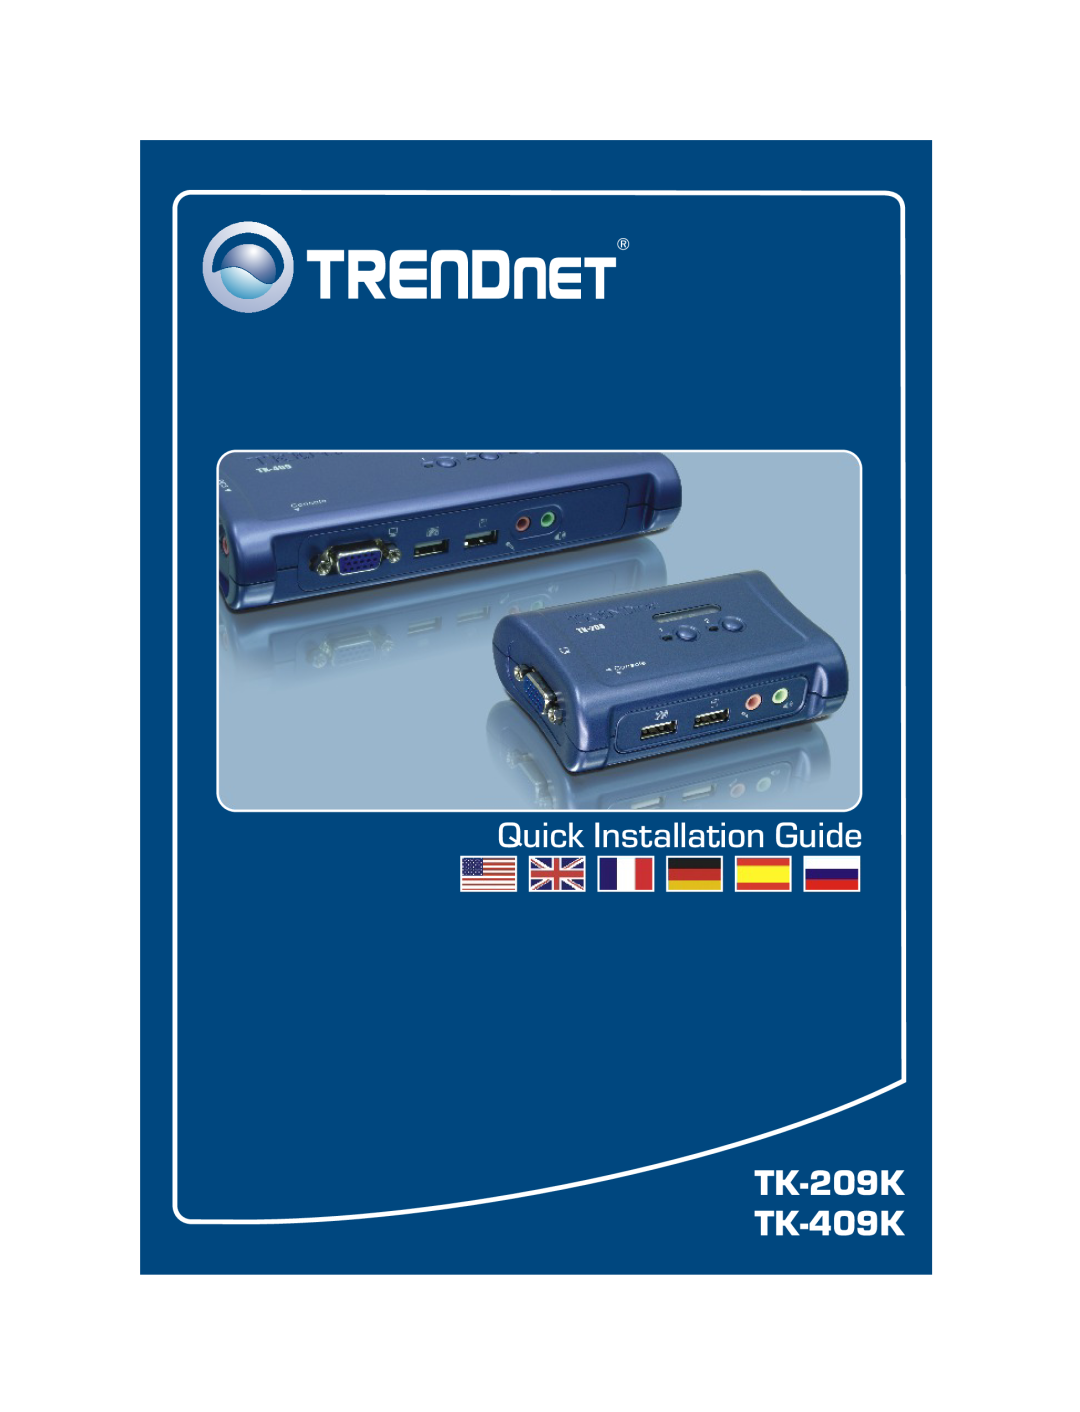 TRENDnet tk-409k, tk-209k manual Quick Installation Guide, TK-209K TK-409K 